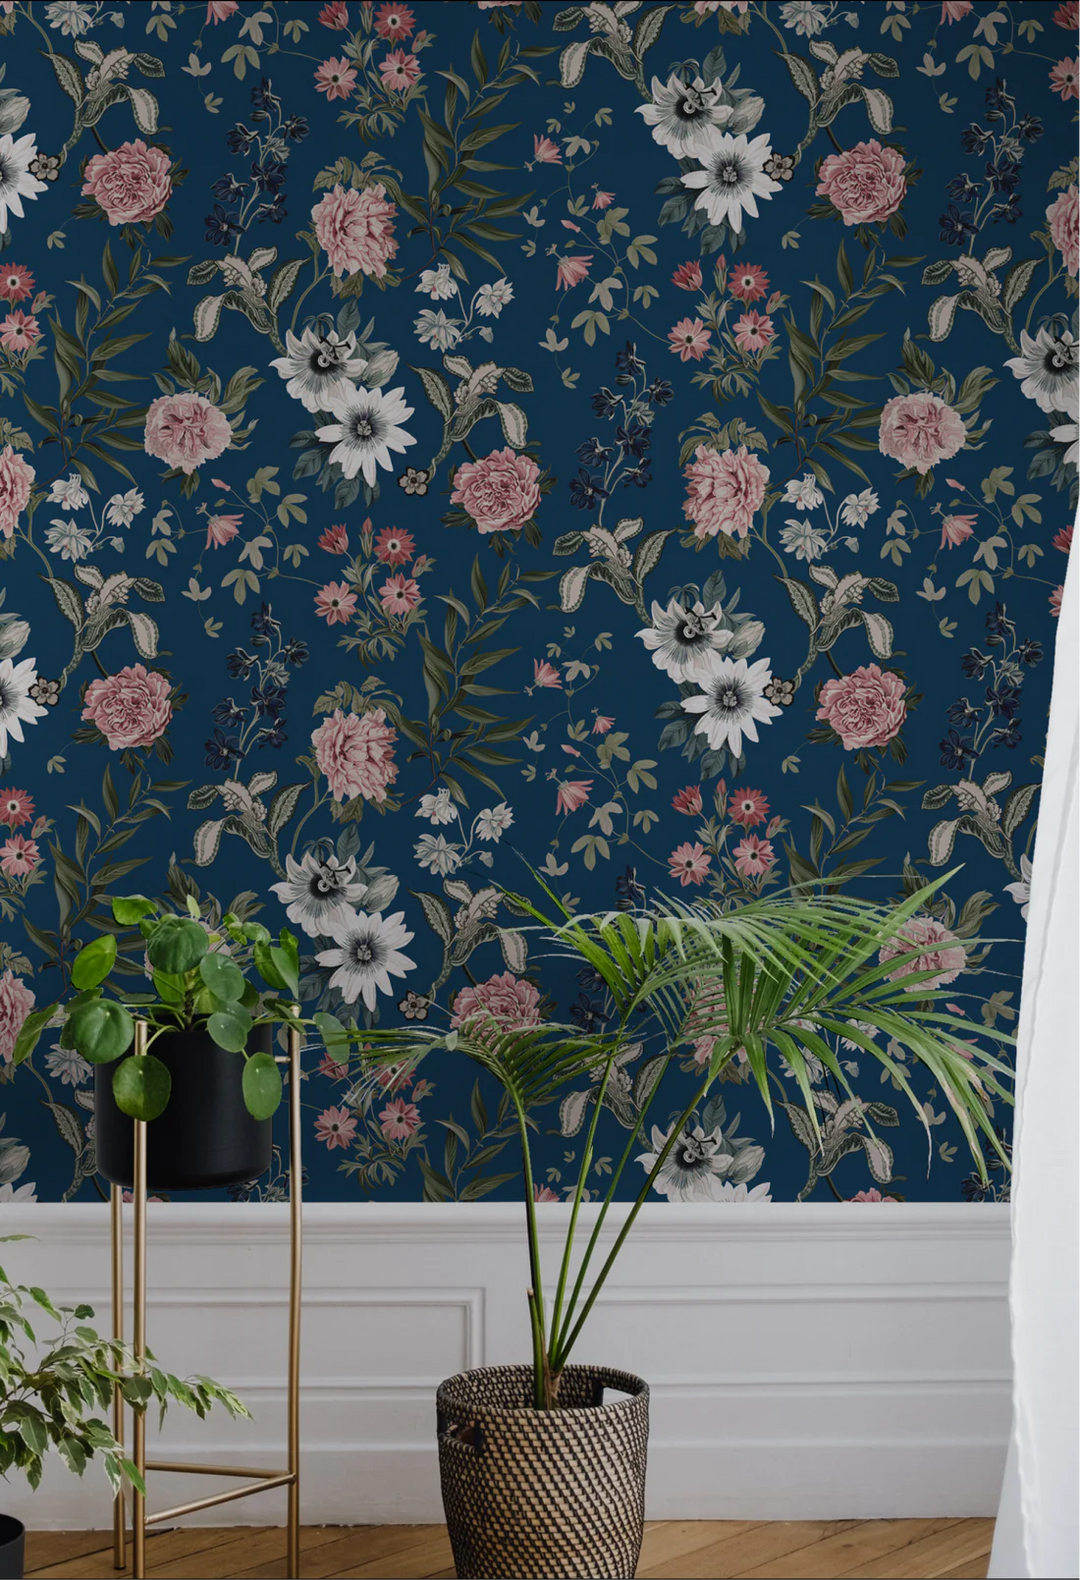 Deus-ex-Gardenia-Beechcroft-garden-wallpaper-azure-navy-blue-base-wild-flowers-english-country-garden-blloms-roses-floral-flouncy-print